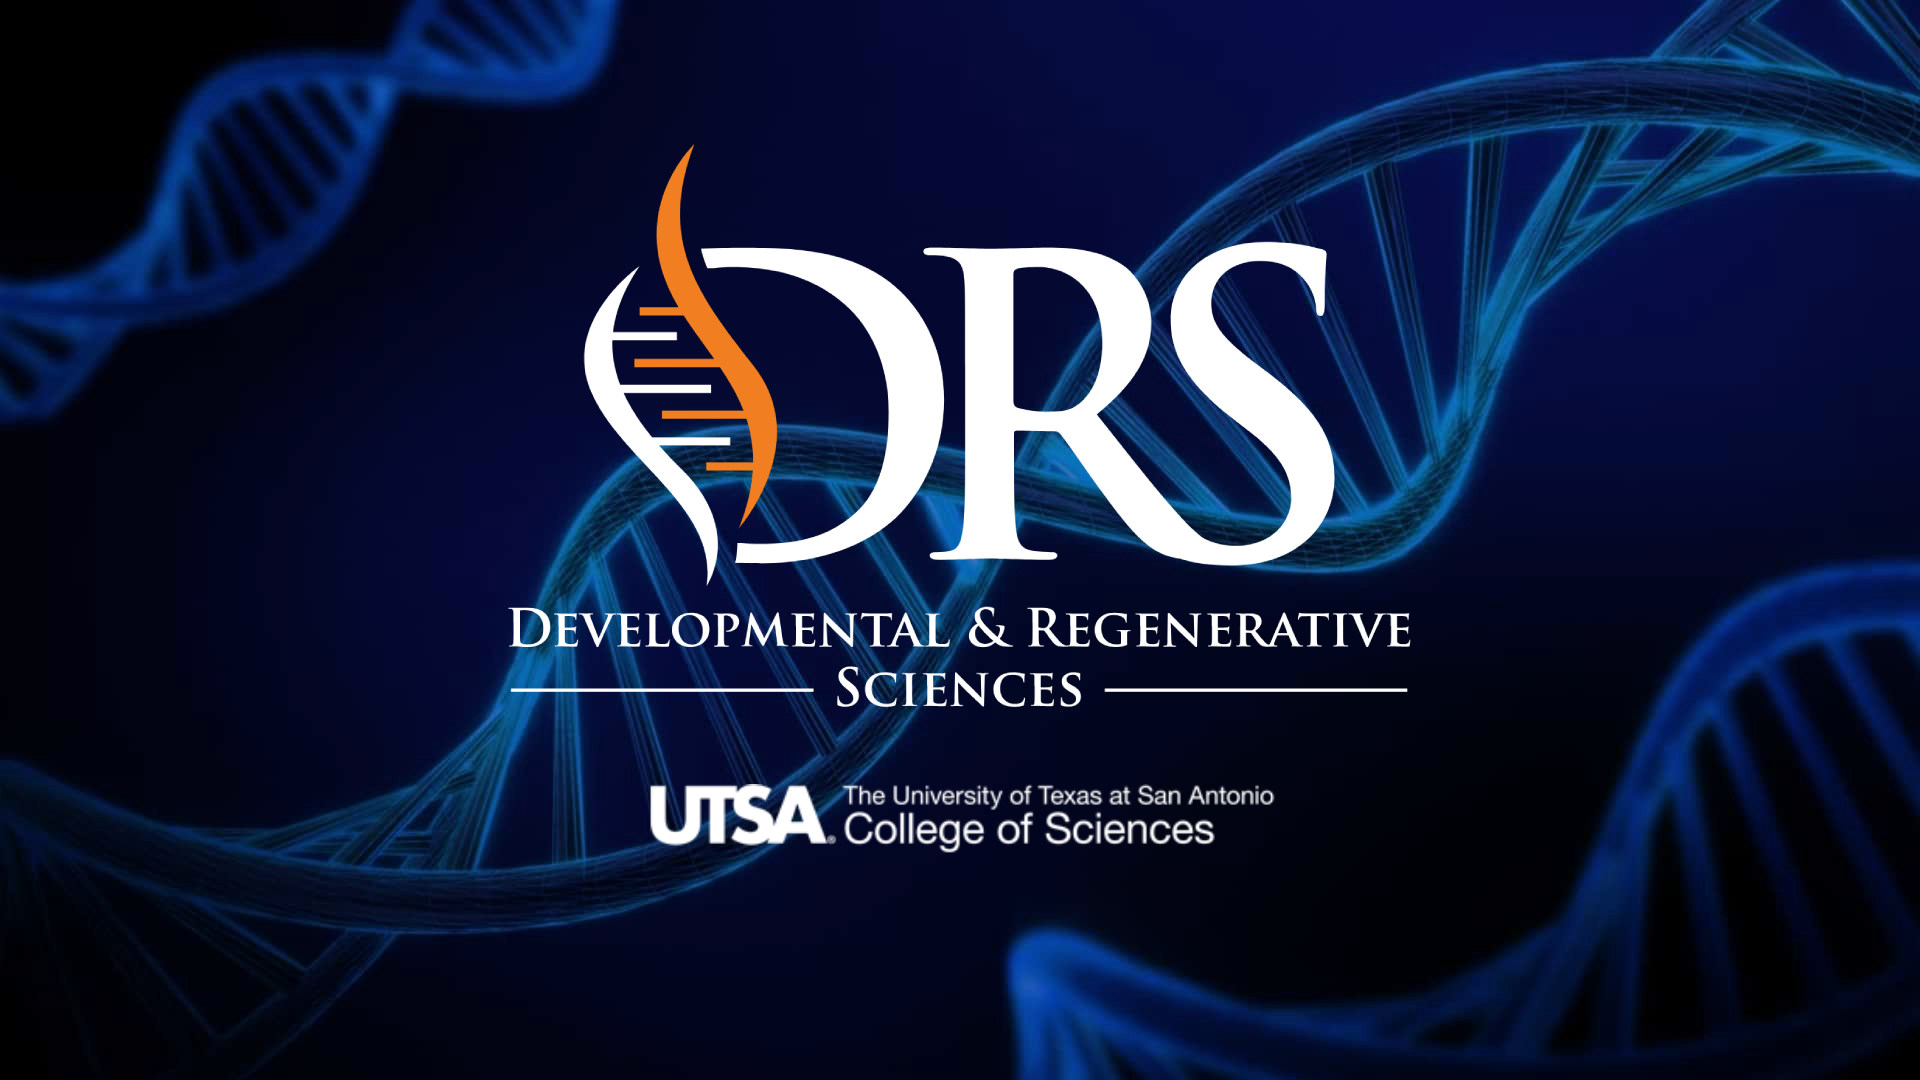 DRS - Developmental and Regenerative Sciences